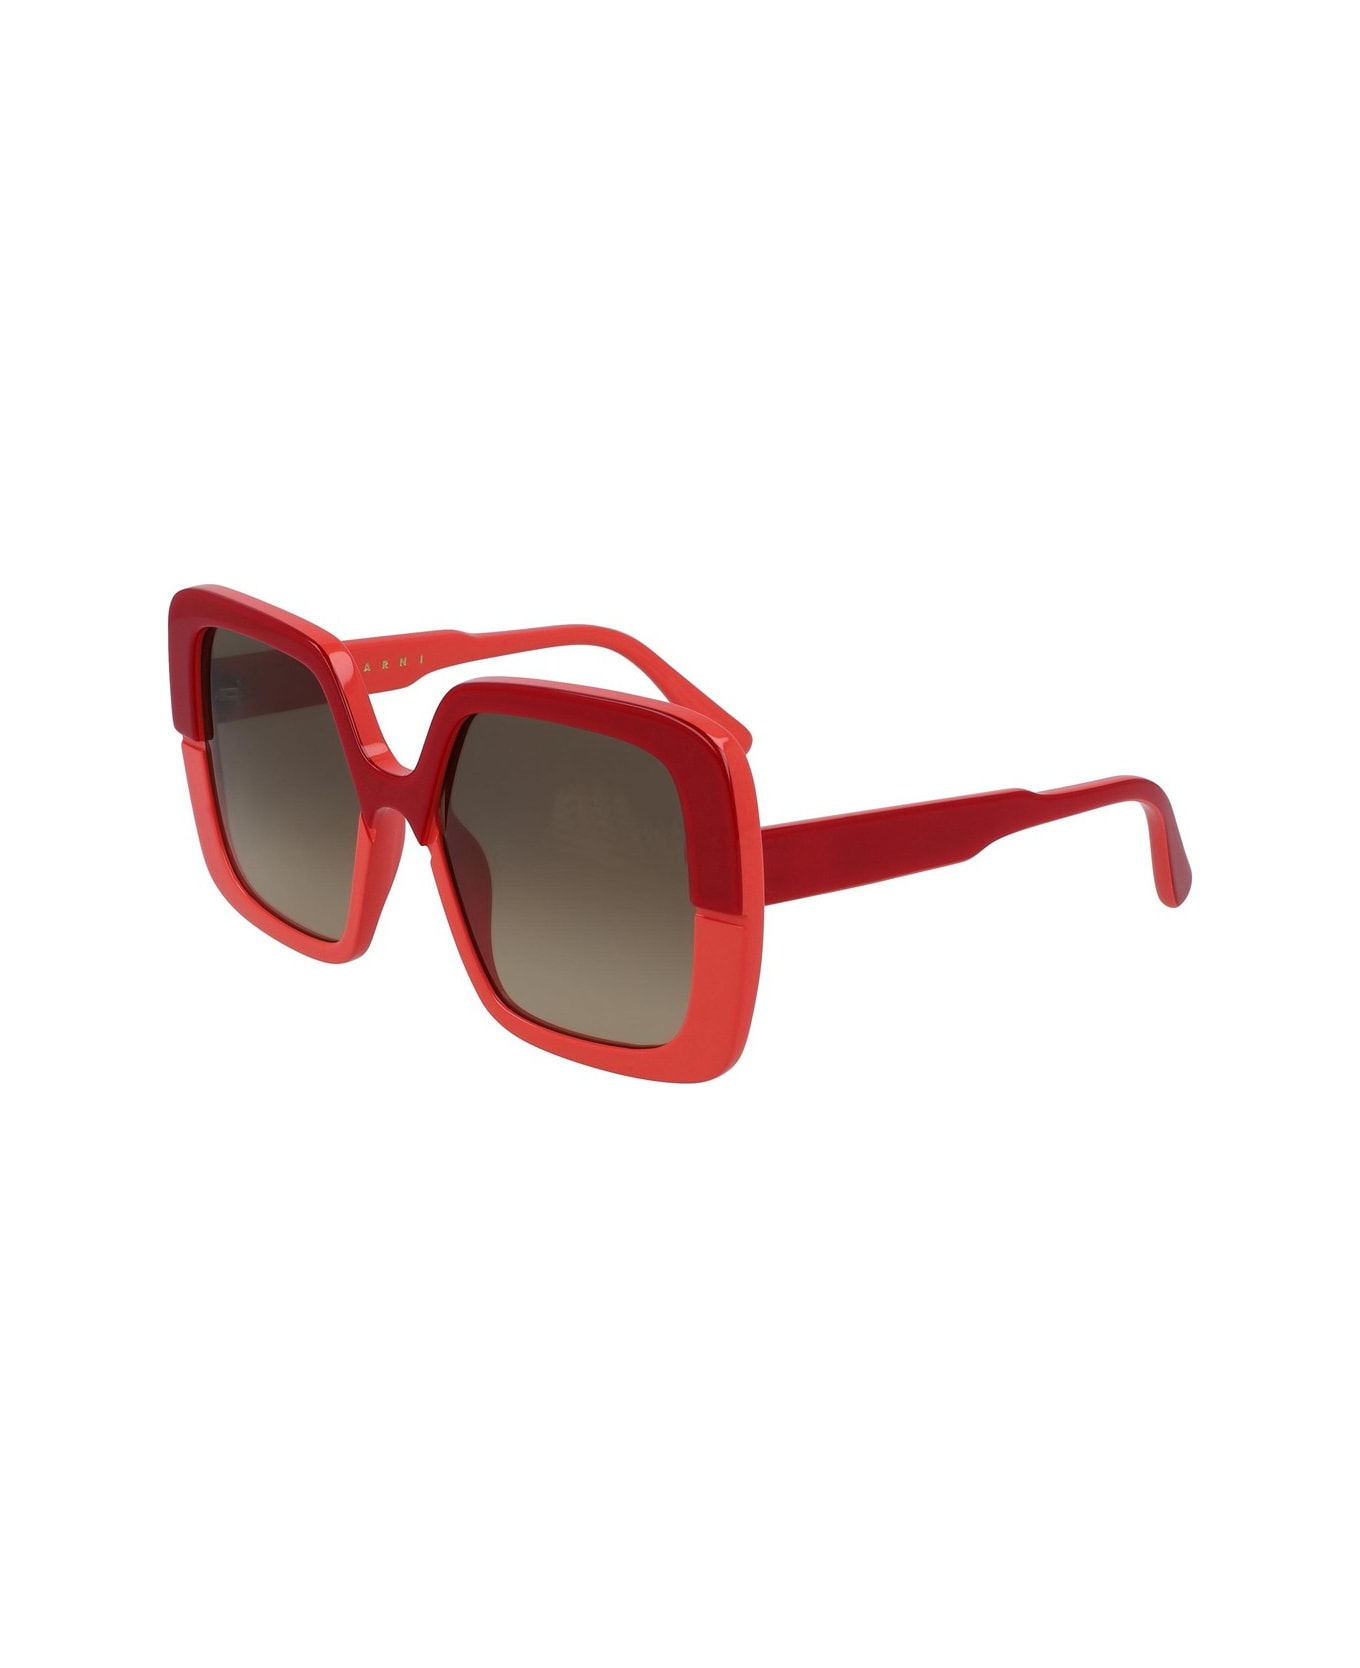 Marni Eyewear Me643s Sunglasses - Rosso サングラス